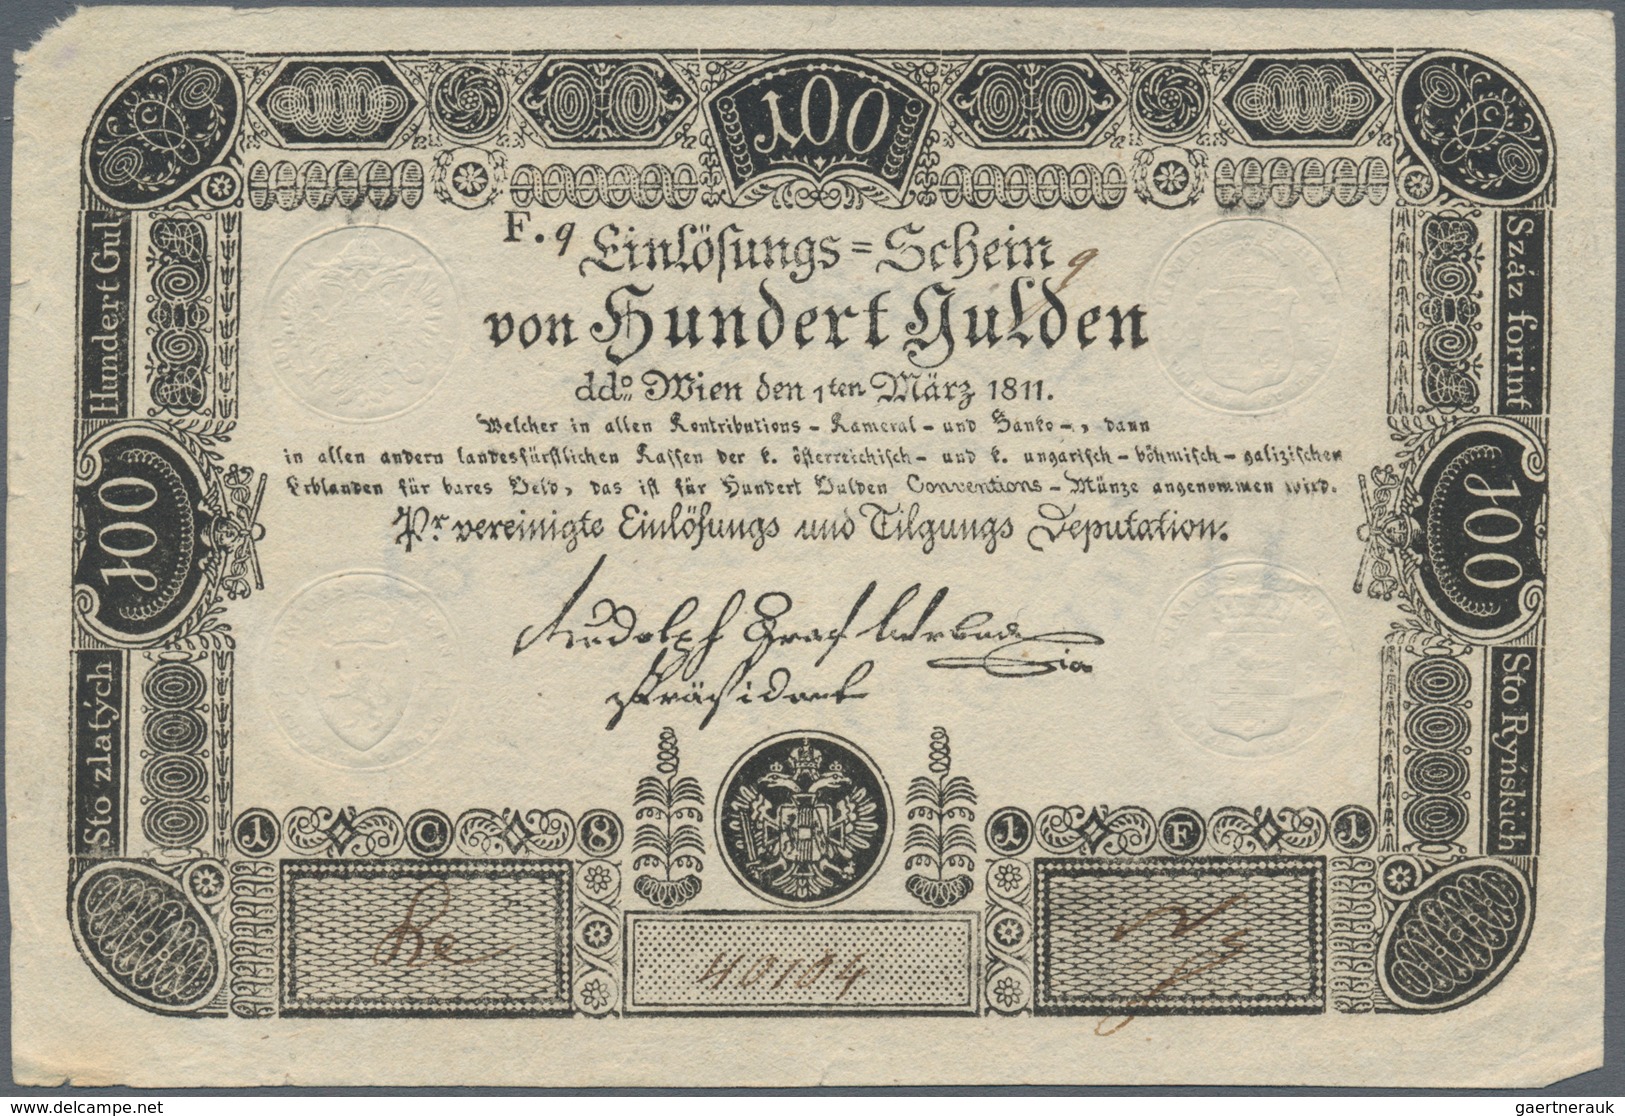 01048 Austria / Österreich: 100 Gulden 1811 Issued Note (not Formular) P. A49a, Highly Rare Banknote, Cent - Oesterreich